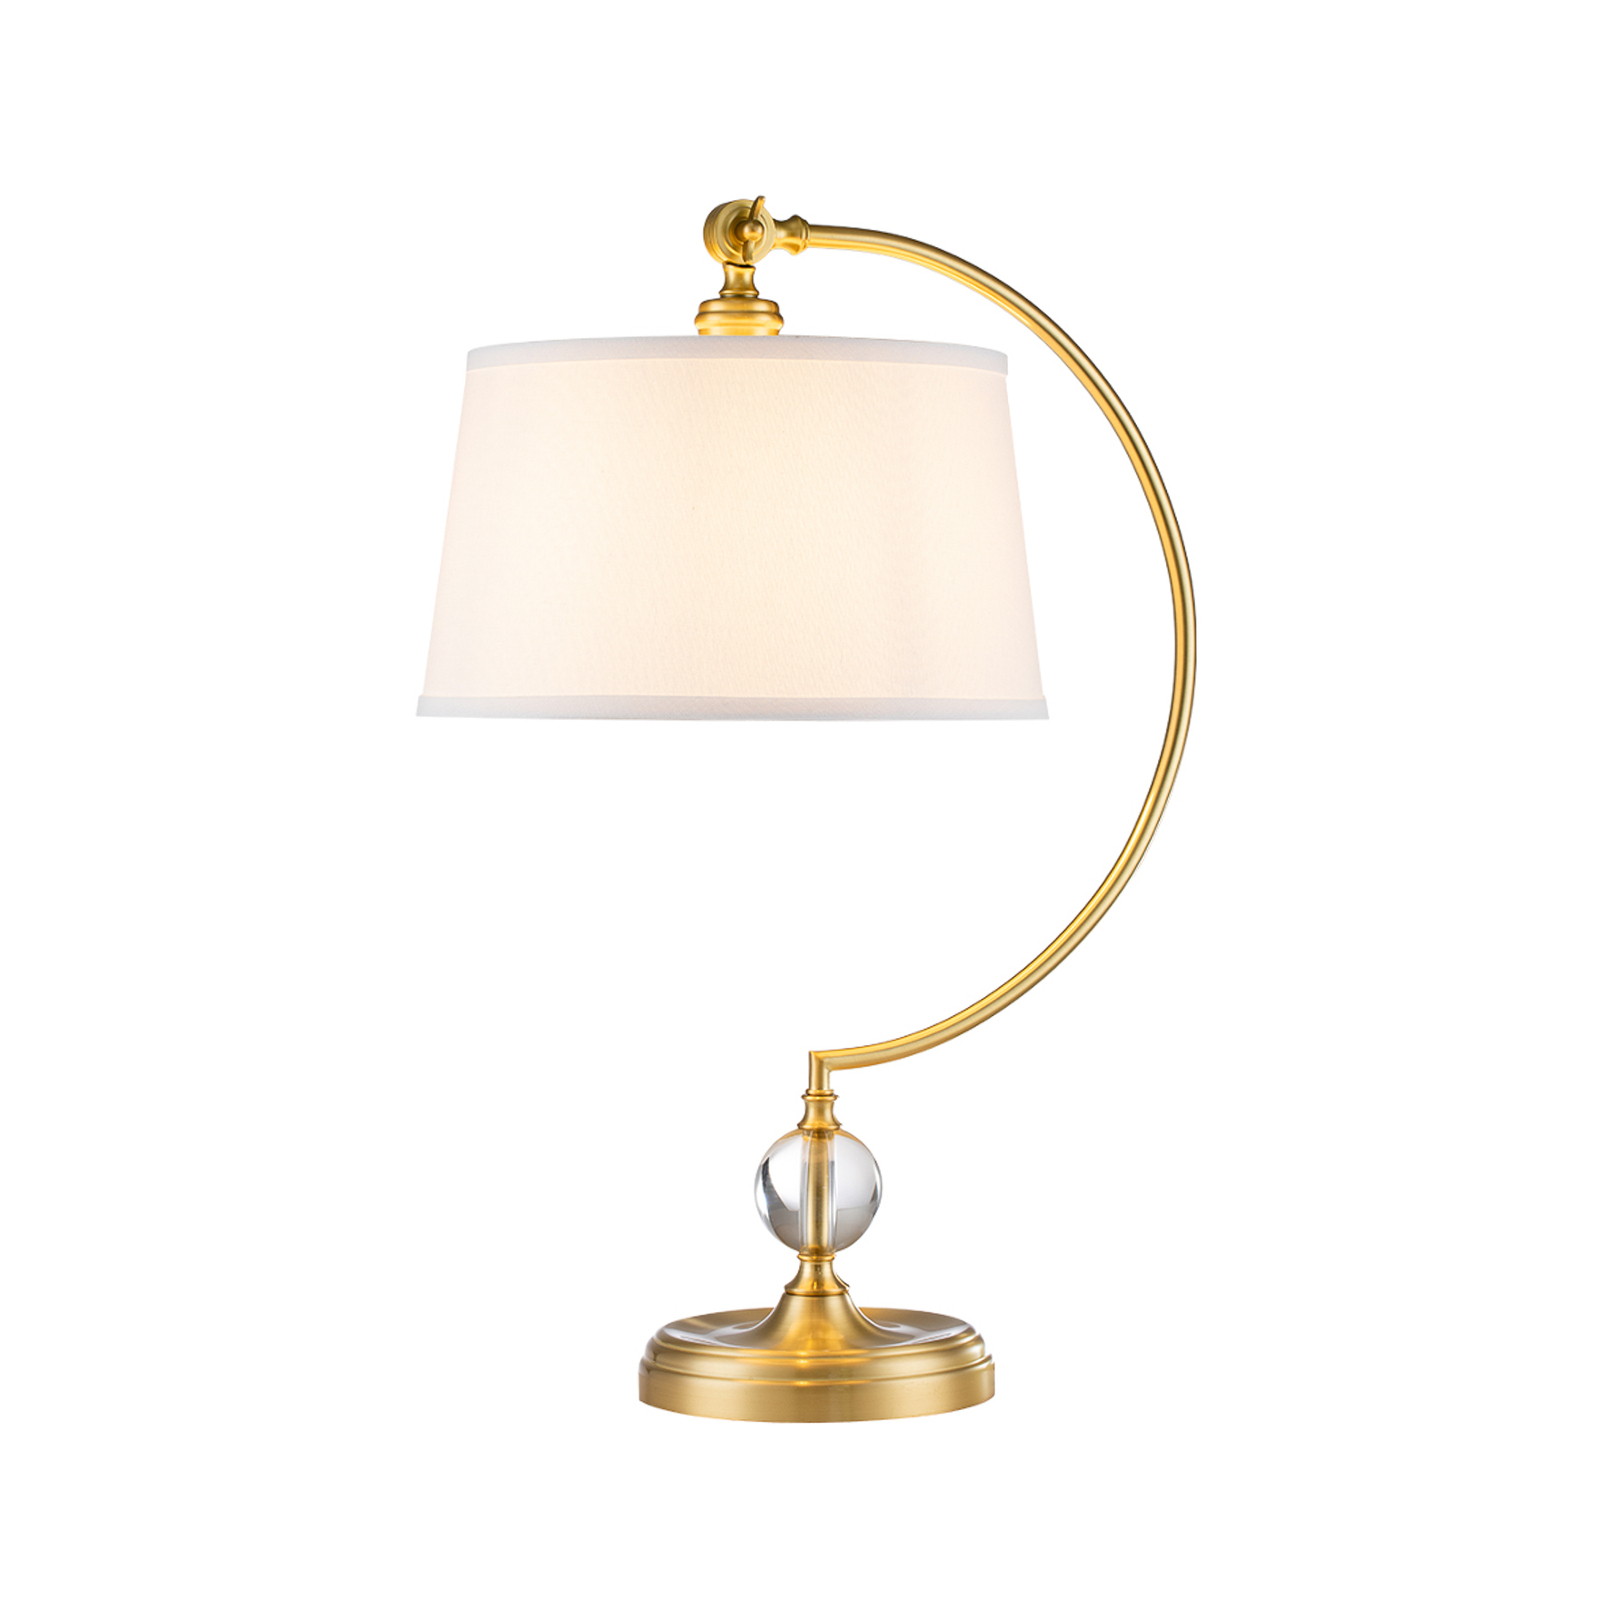 Jenkins fabric table lamp, brushed brass/cream